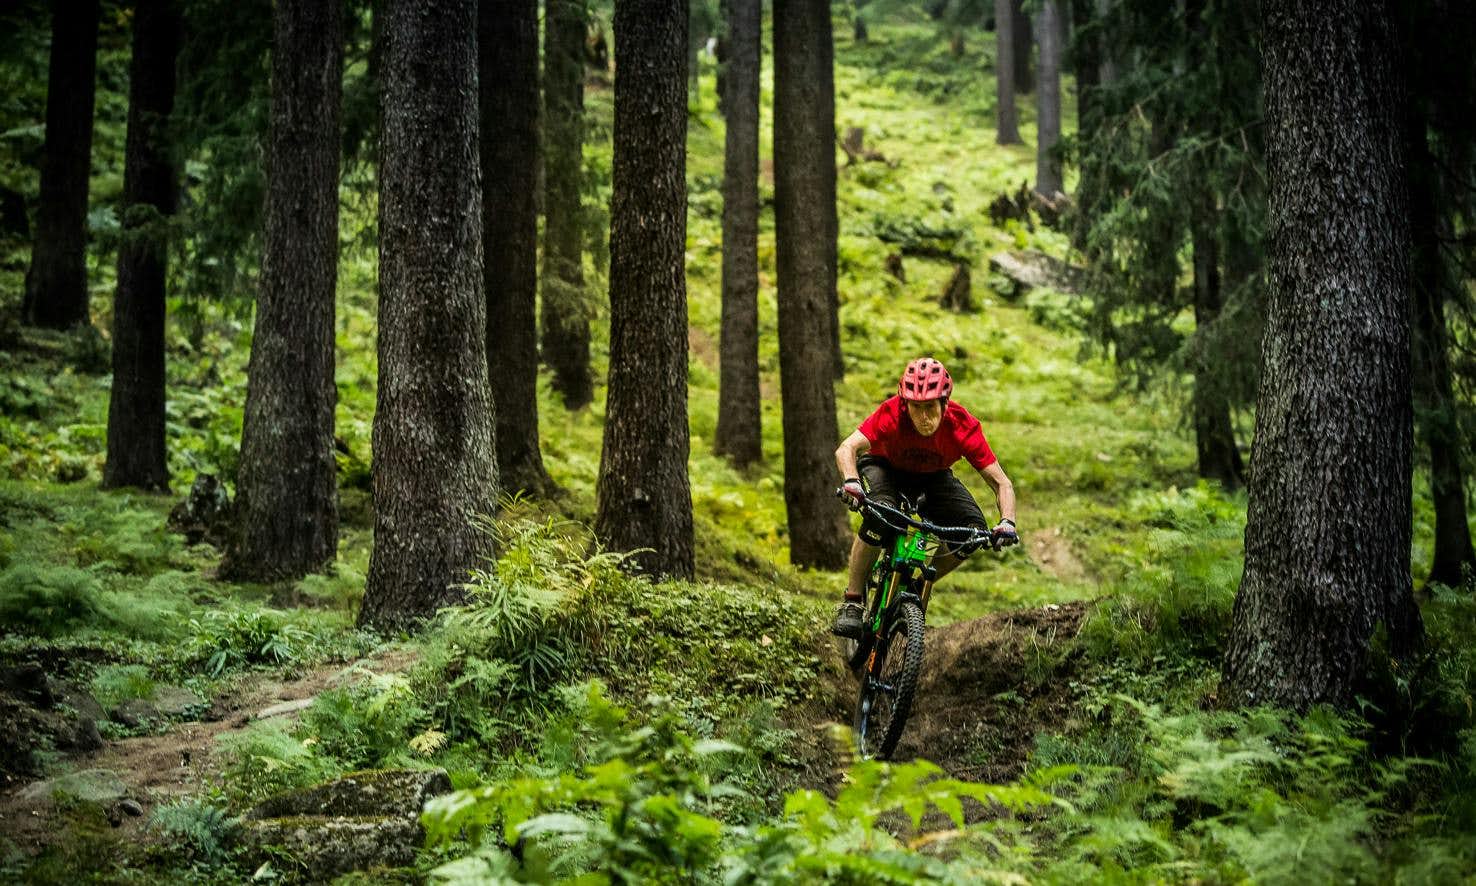 mountain biking downhill in a forest